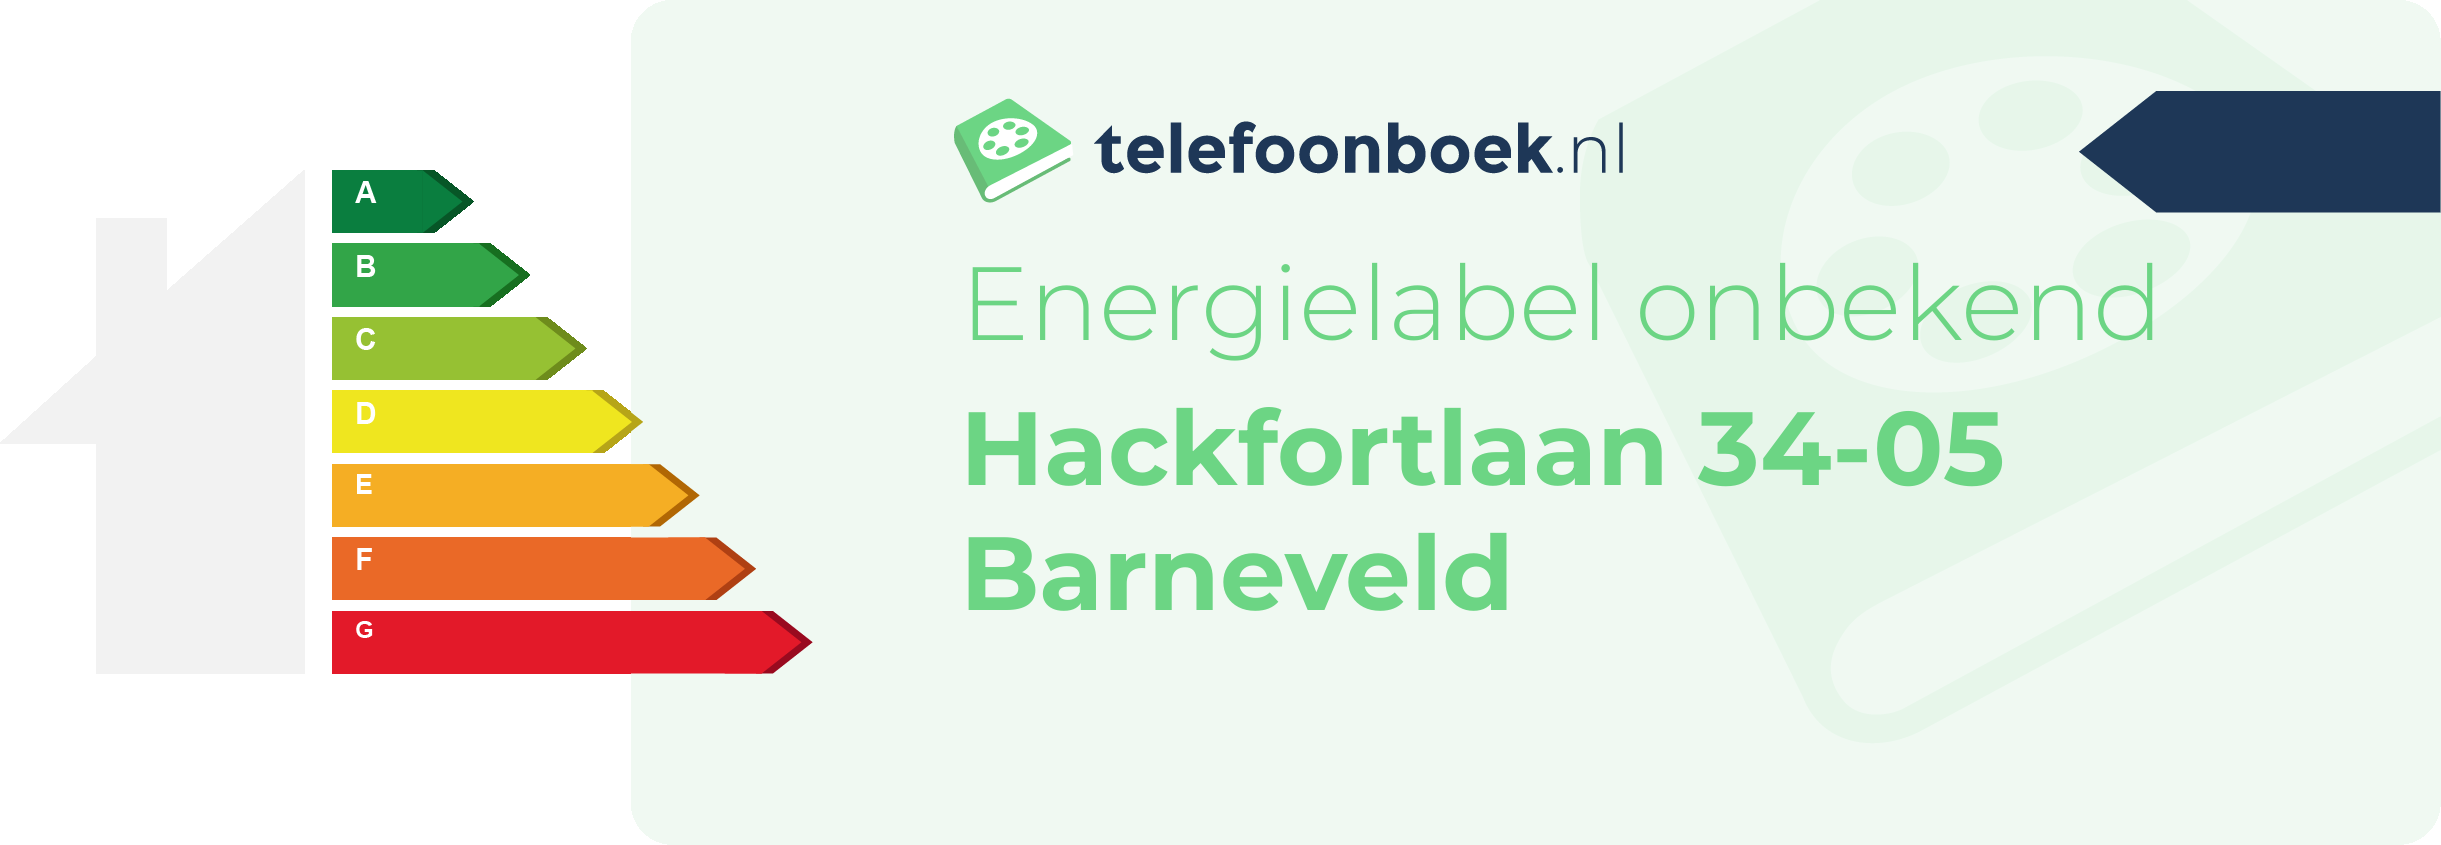 Energielabel Hackfortlaan 34-05 Barneveld